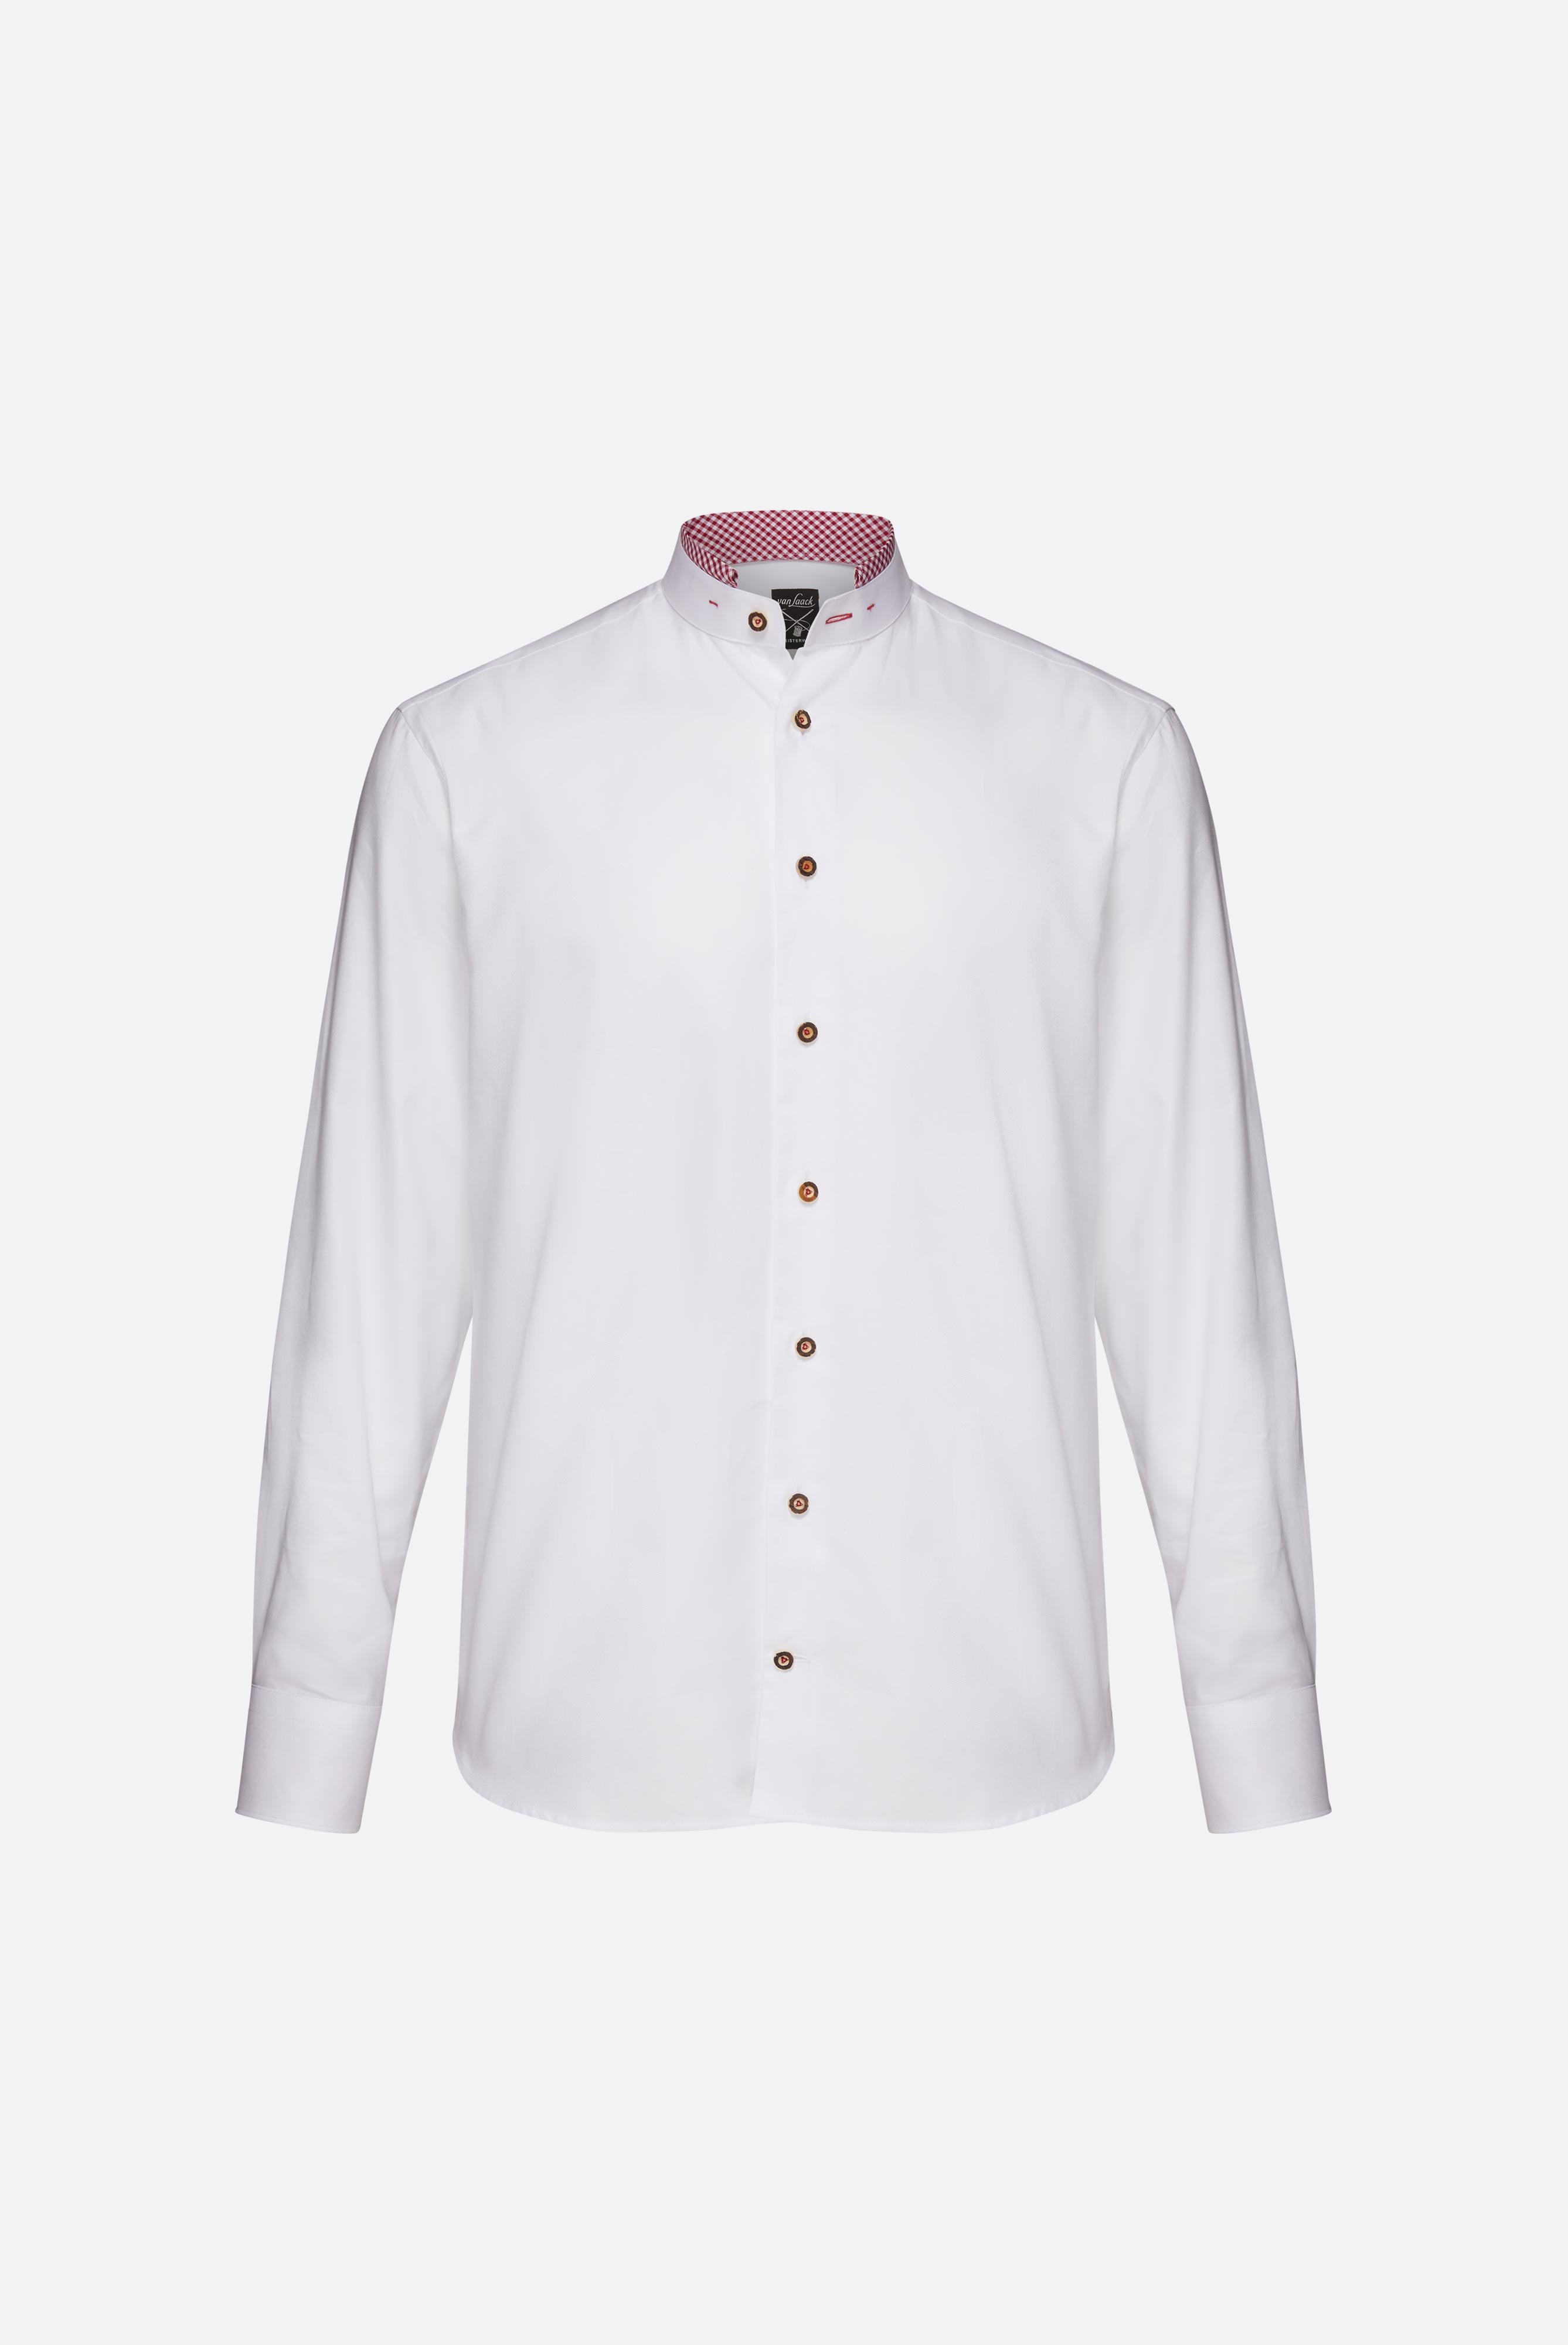 Festliche Hemden+Oxford Tradtional Shirt with coloured detail+20.2081.8Q.150251.005.39